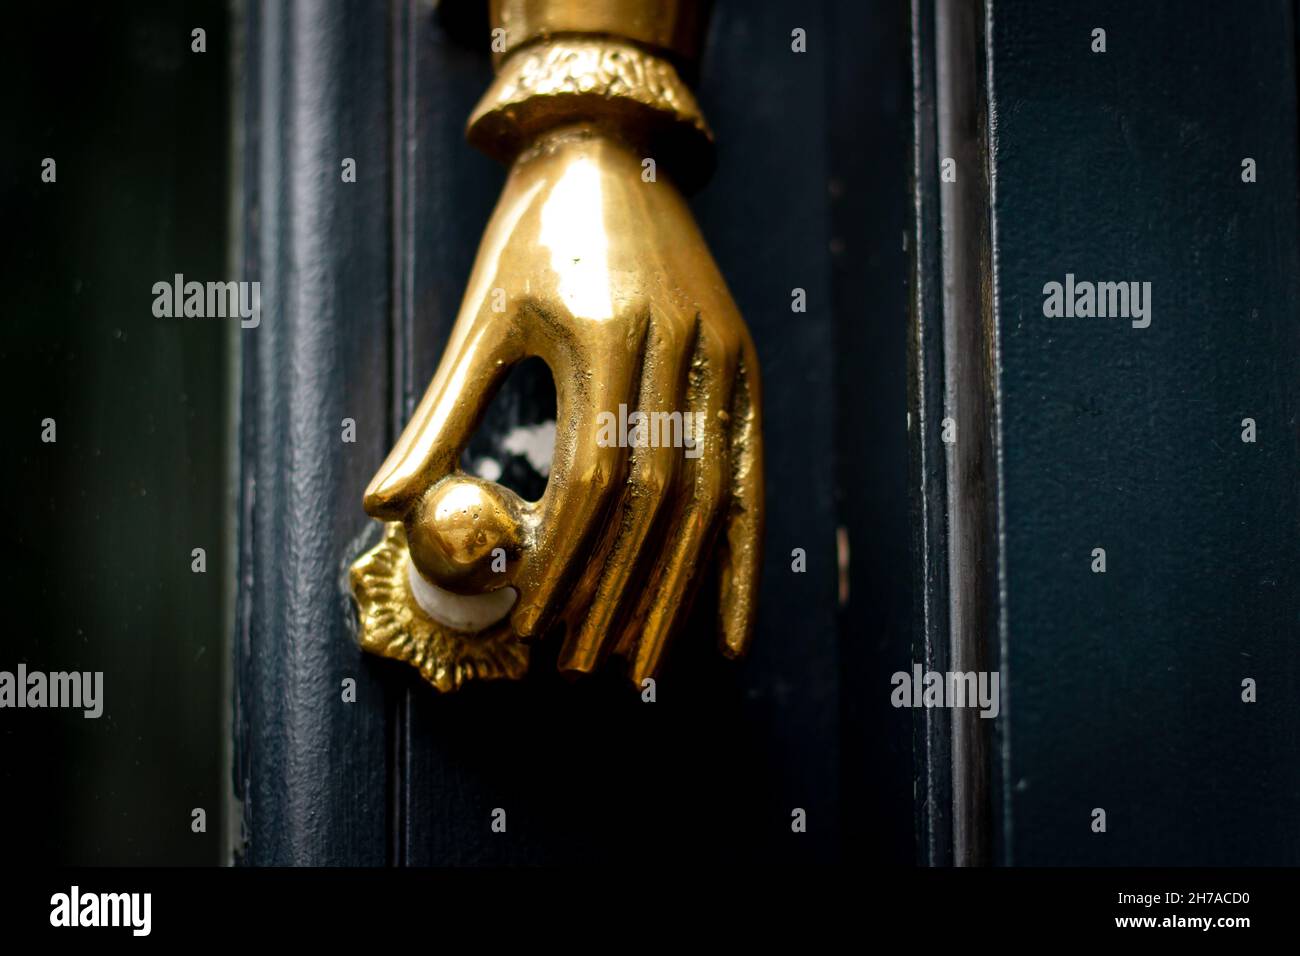 Golden hand holding a door knob a a door knocker in London Stock Photo